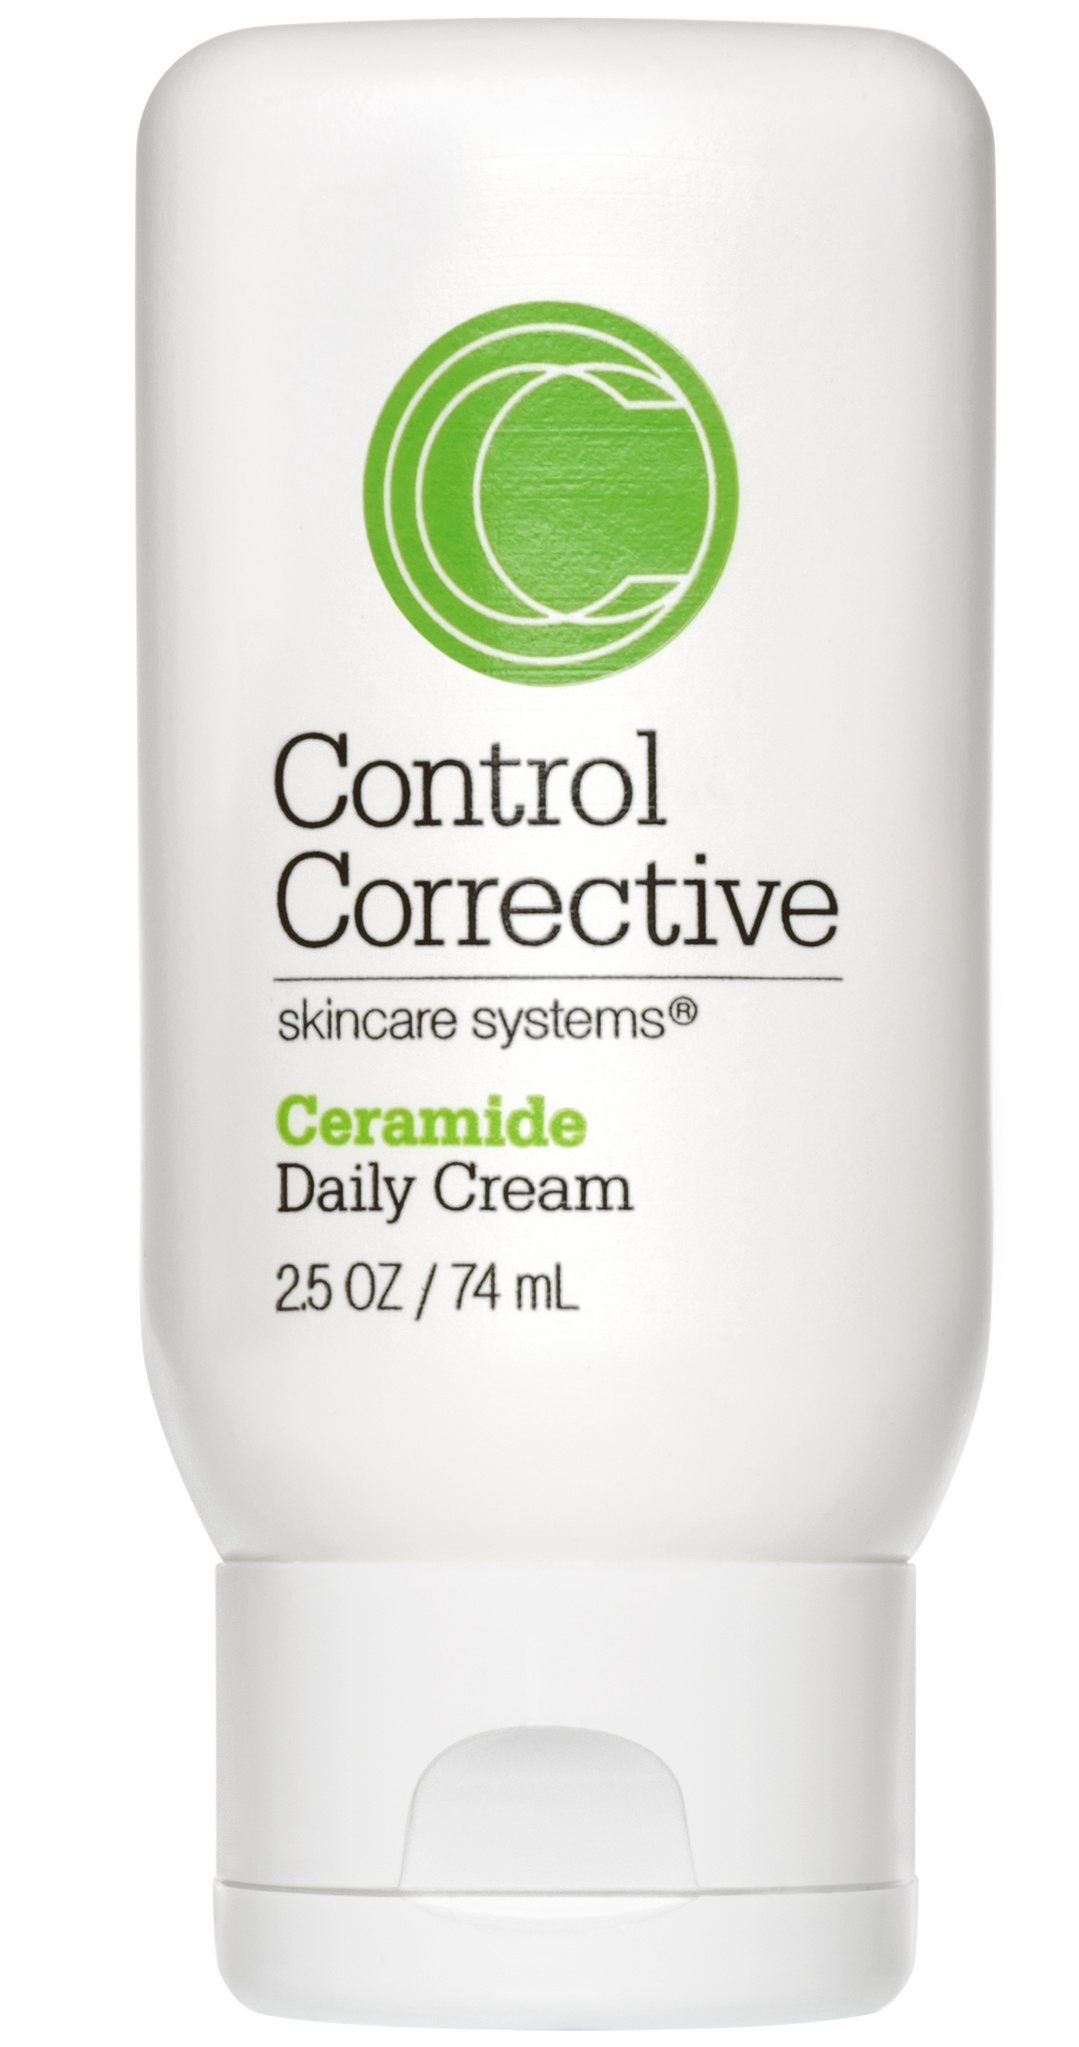 Control Corrective Ceramide Daily Cream